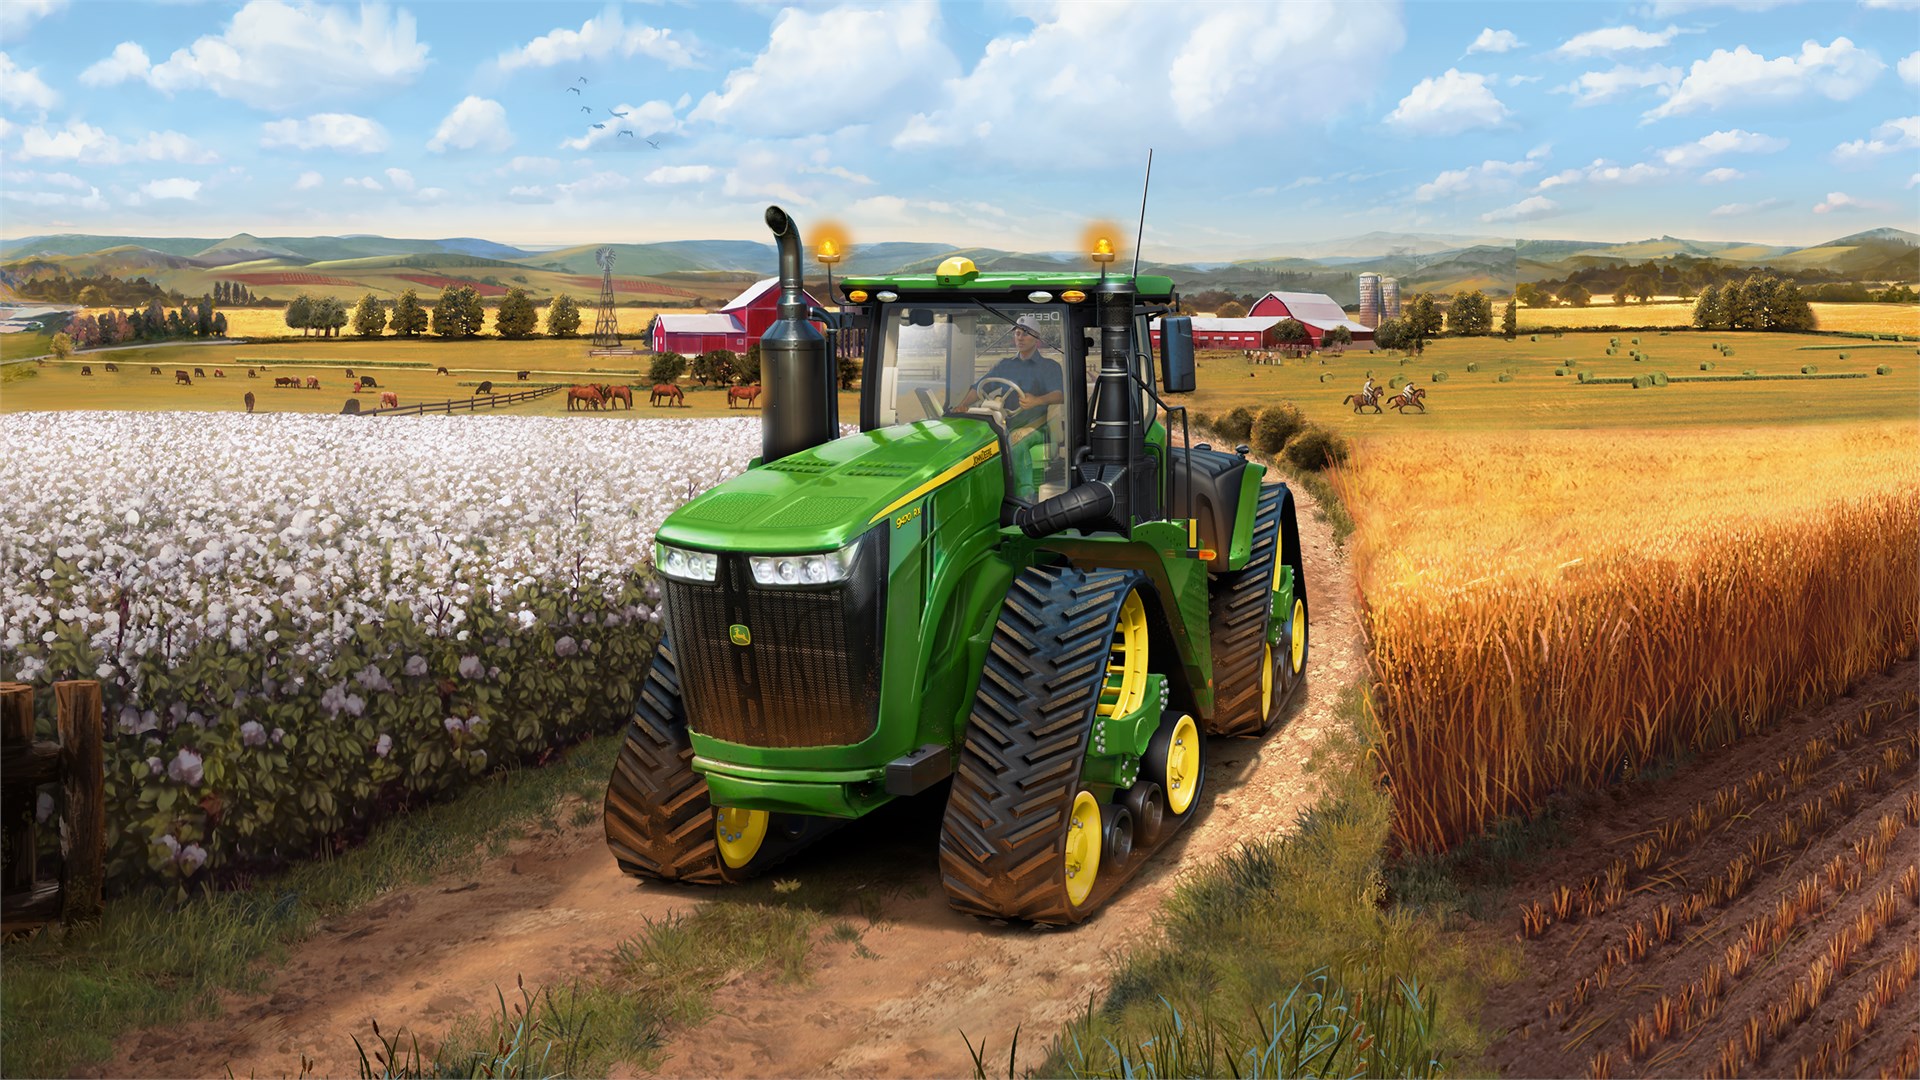 buy-farming-simulator-19-premium-edition-xbox-cheap-from-25-usd-xbox-now